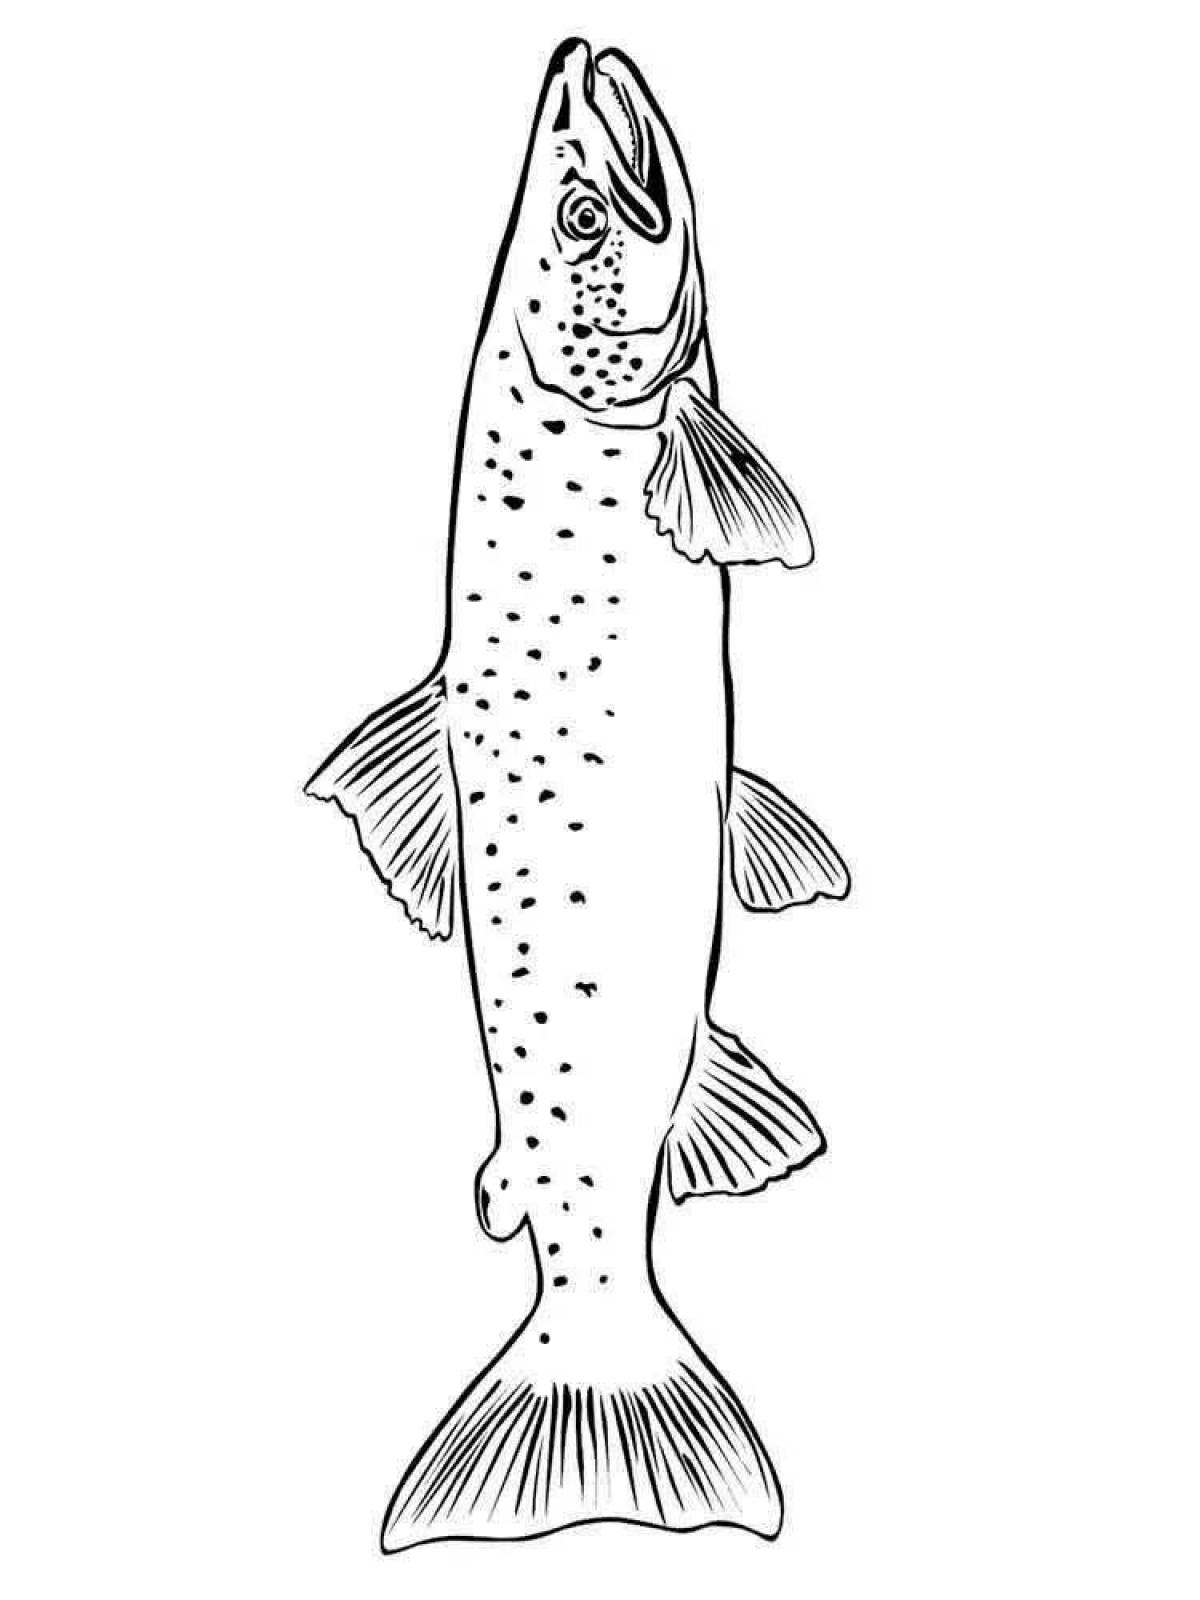 Fancy trout coloring book